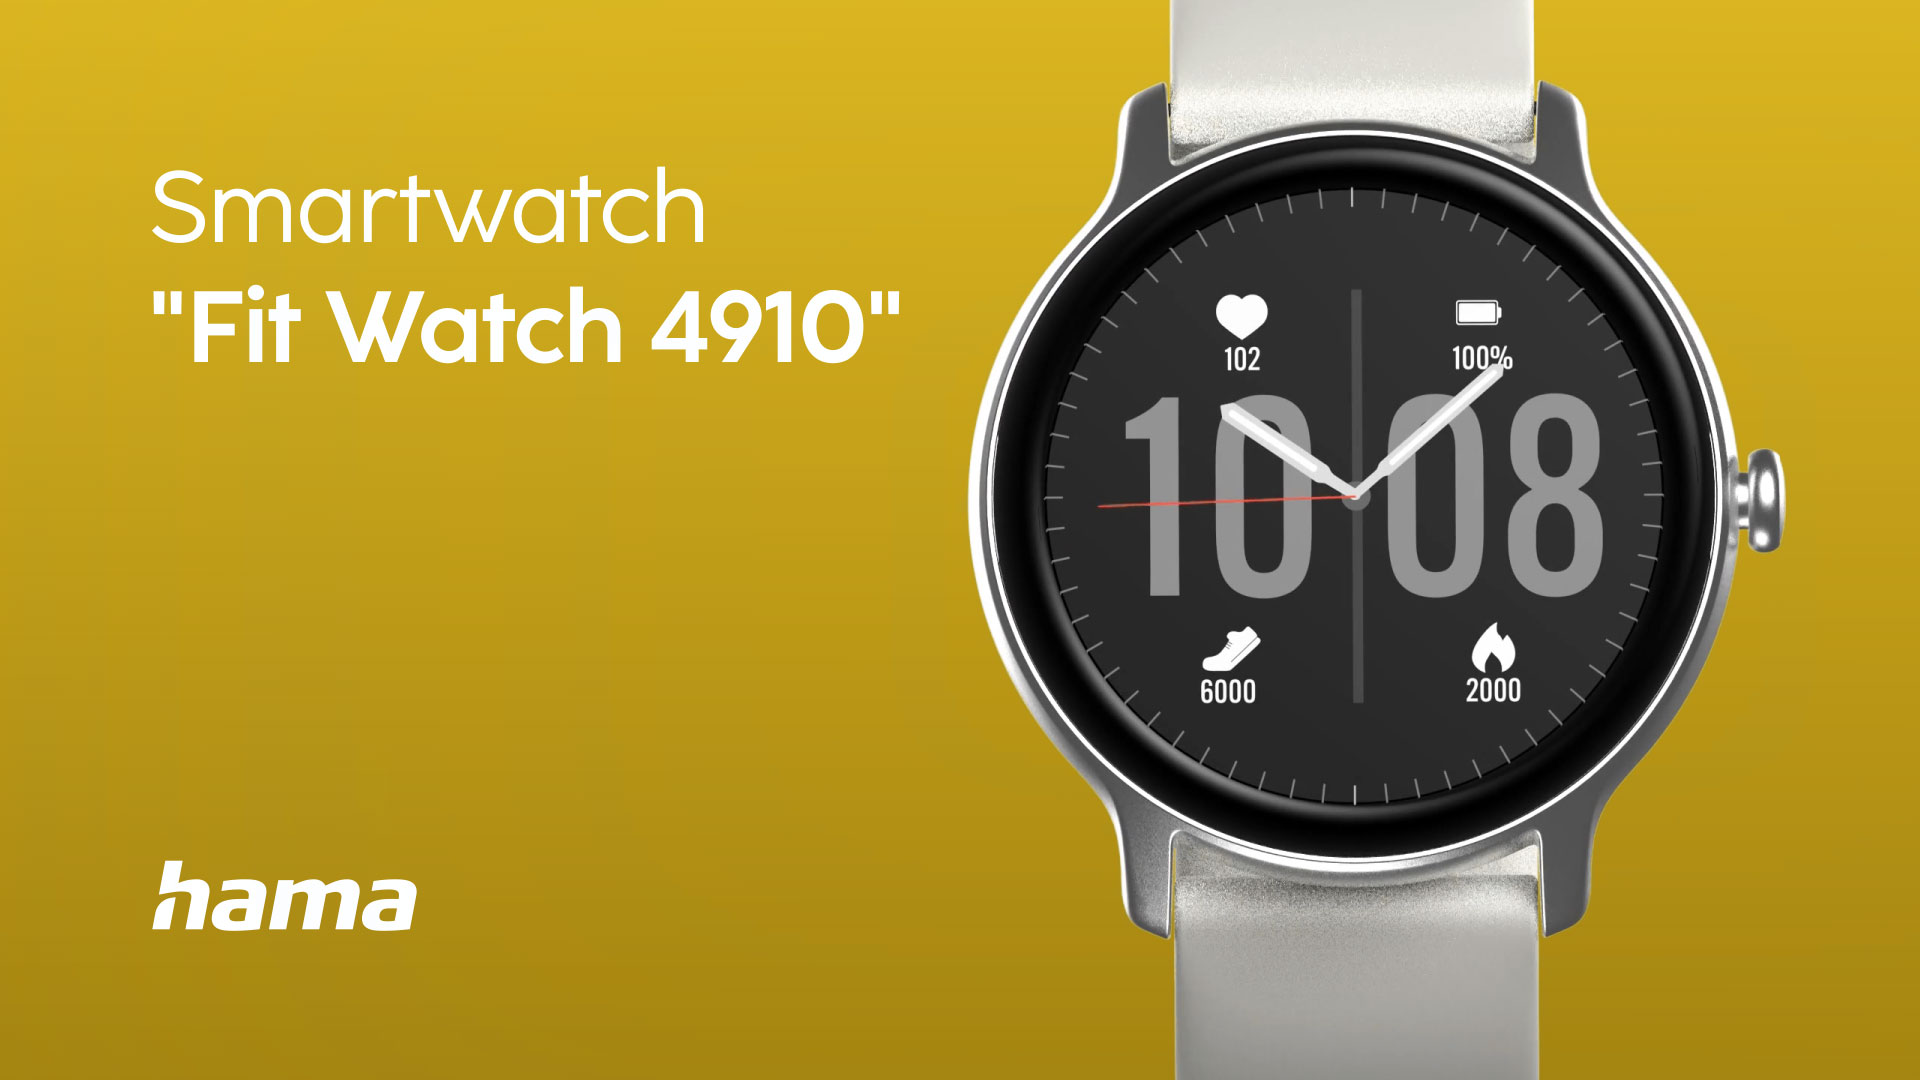 Hama Smartwatch "Fit Watch 4910“